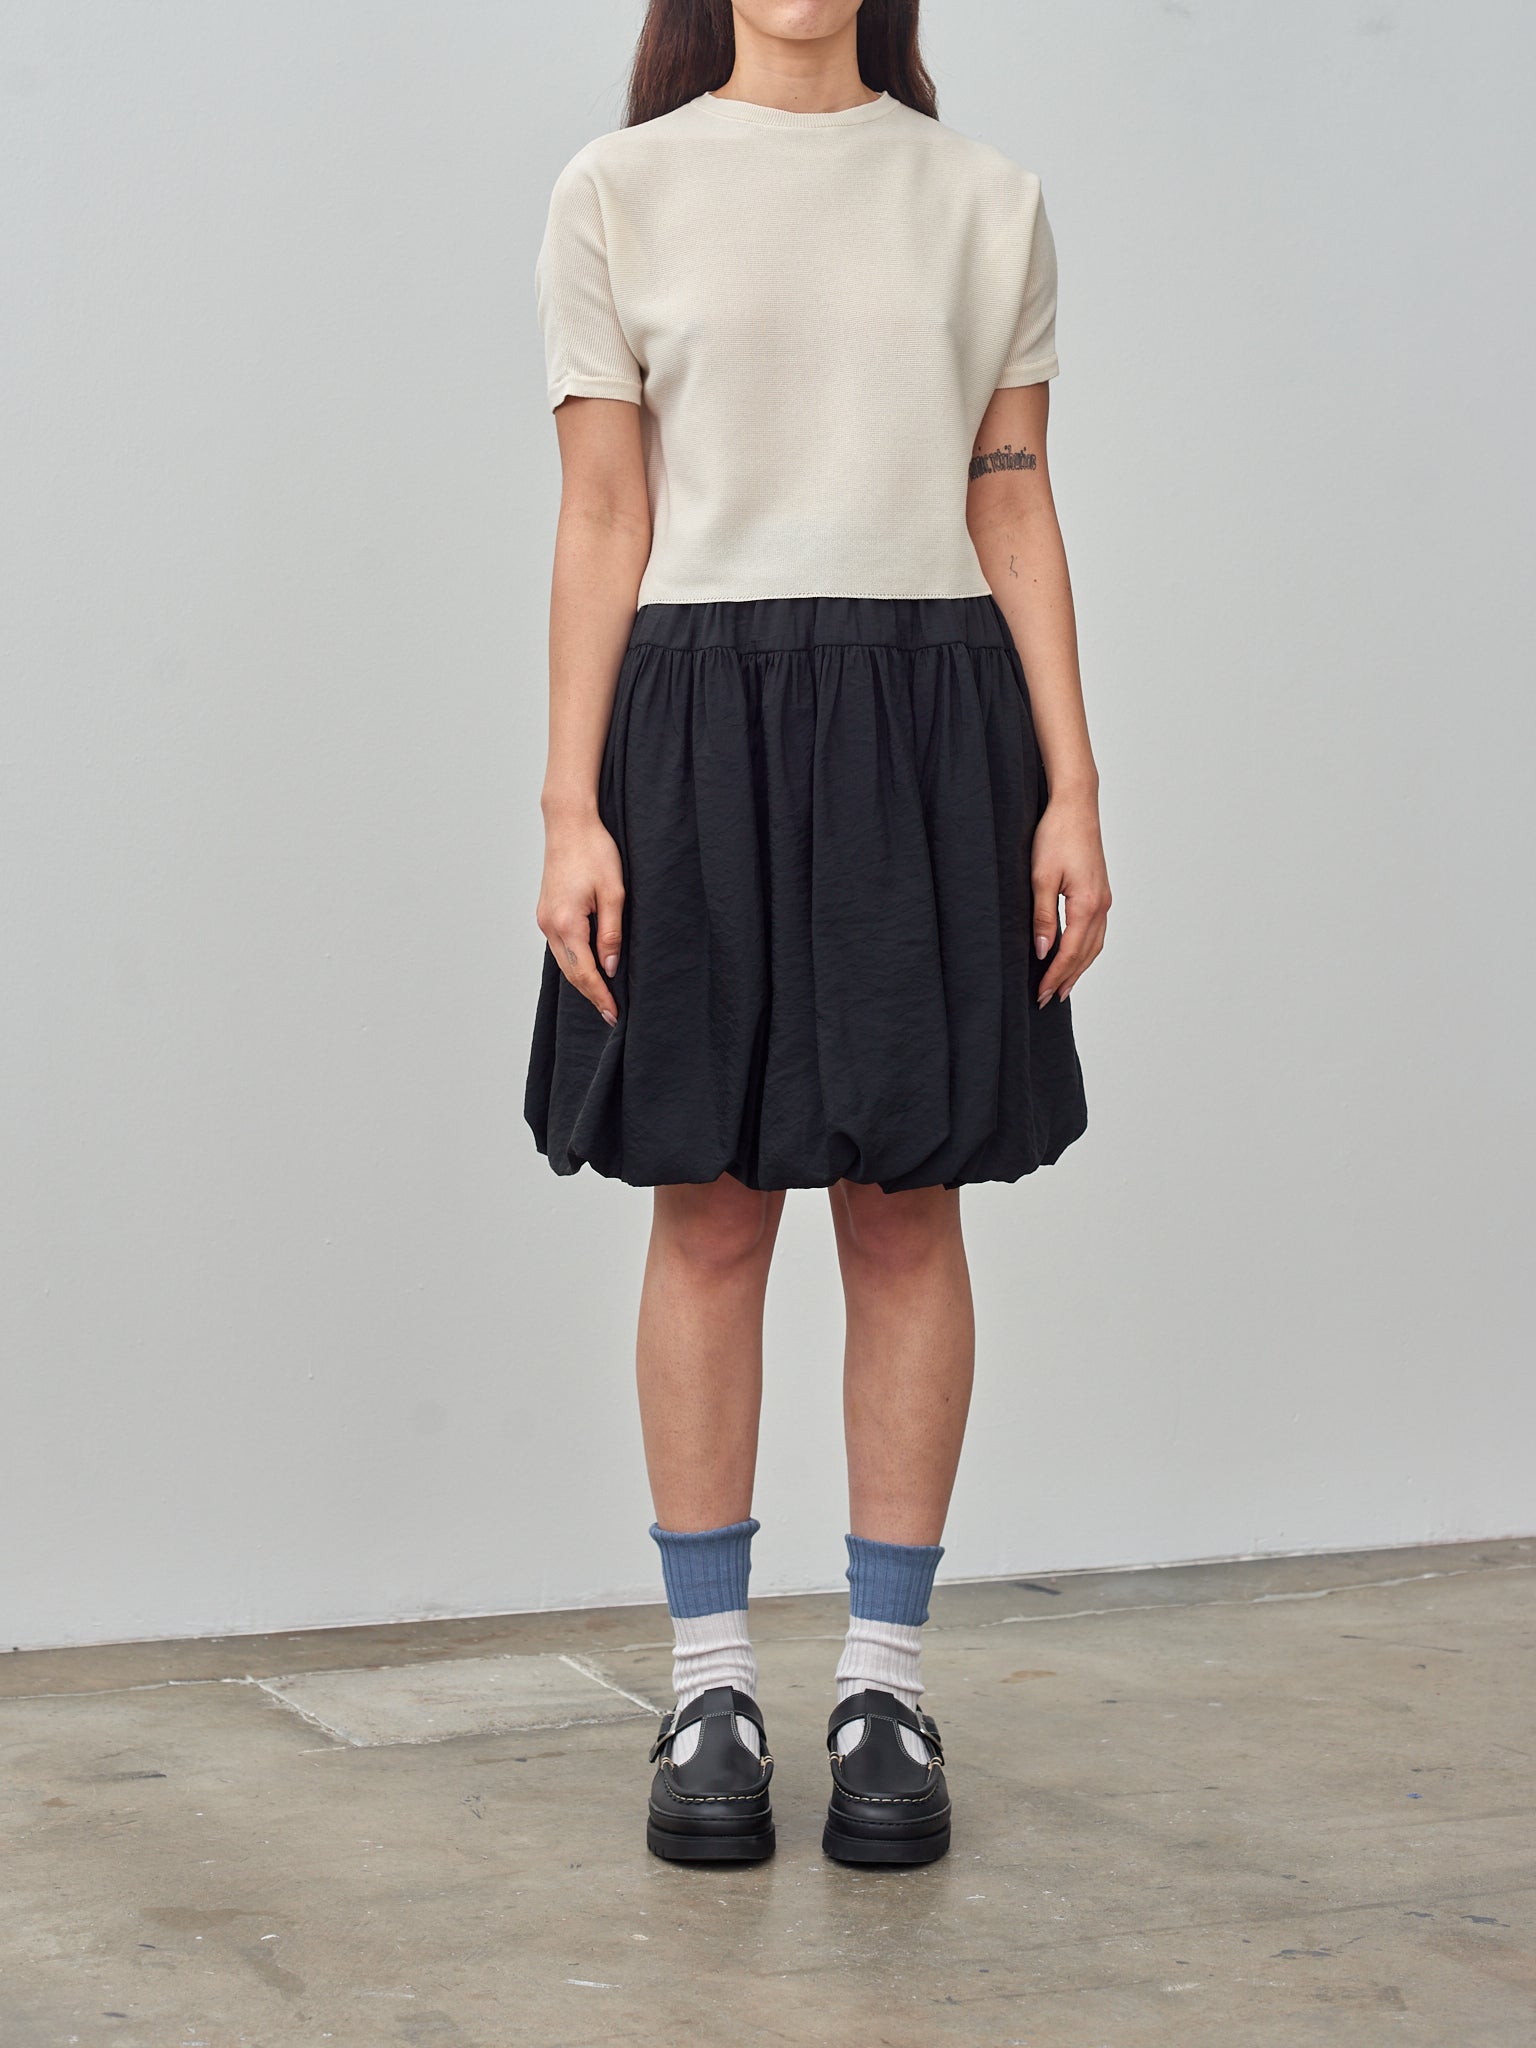 Namu Shop - Sara Lanzi Knitted Light Cotton T-Shirt - Milk